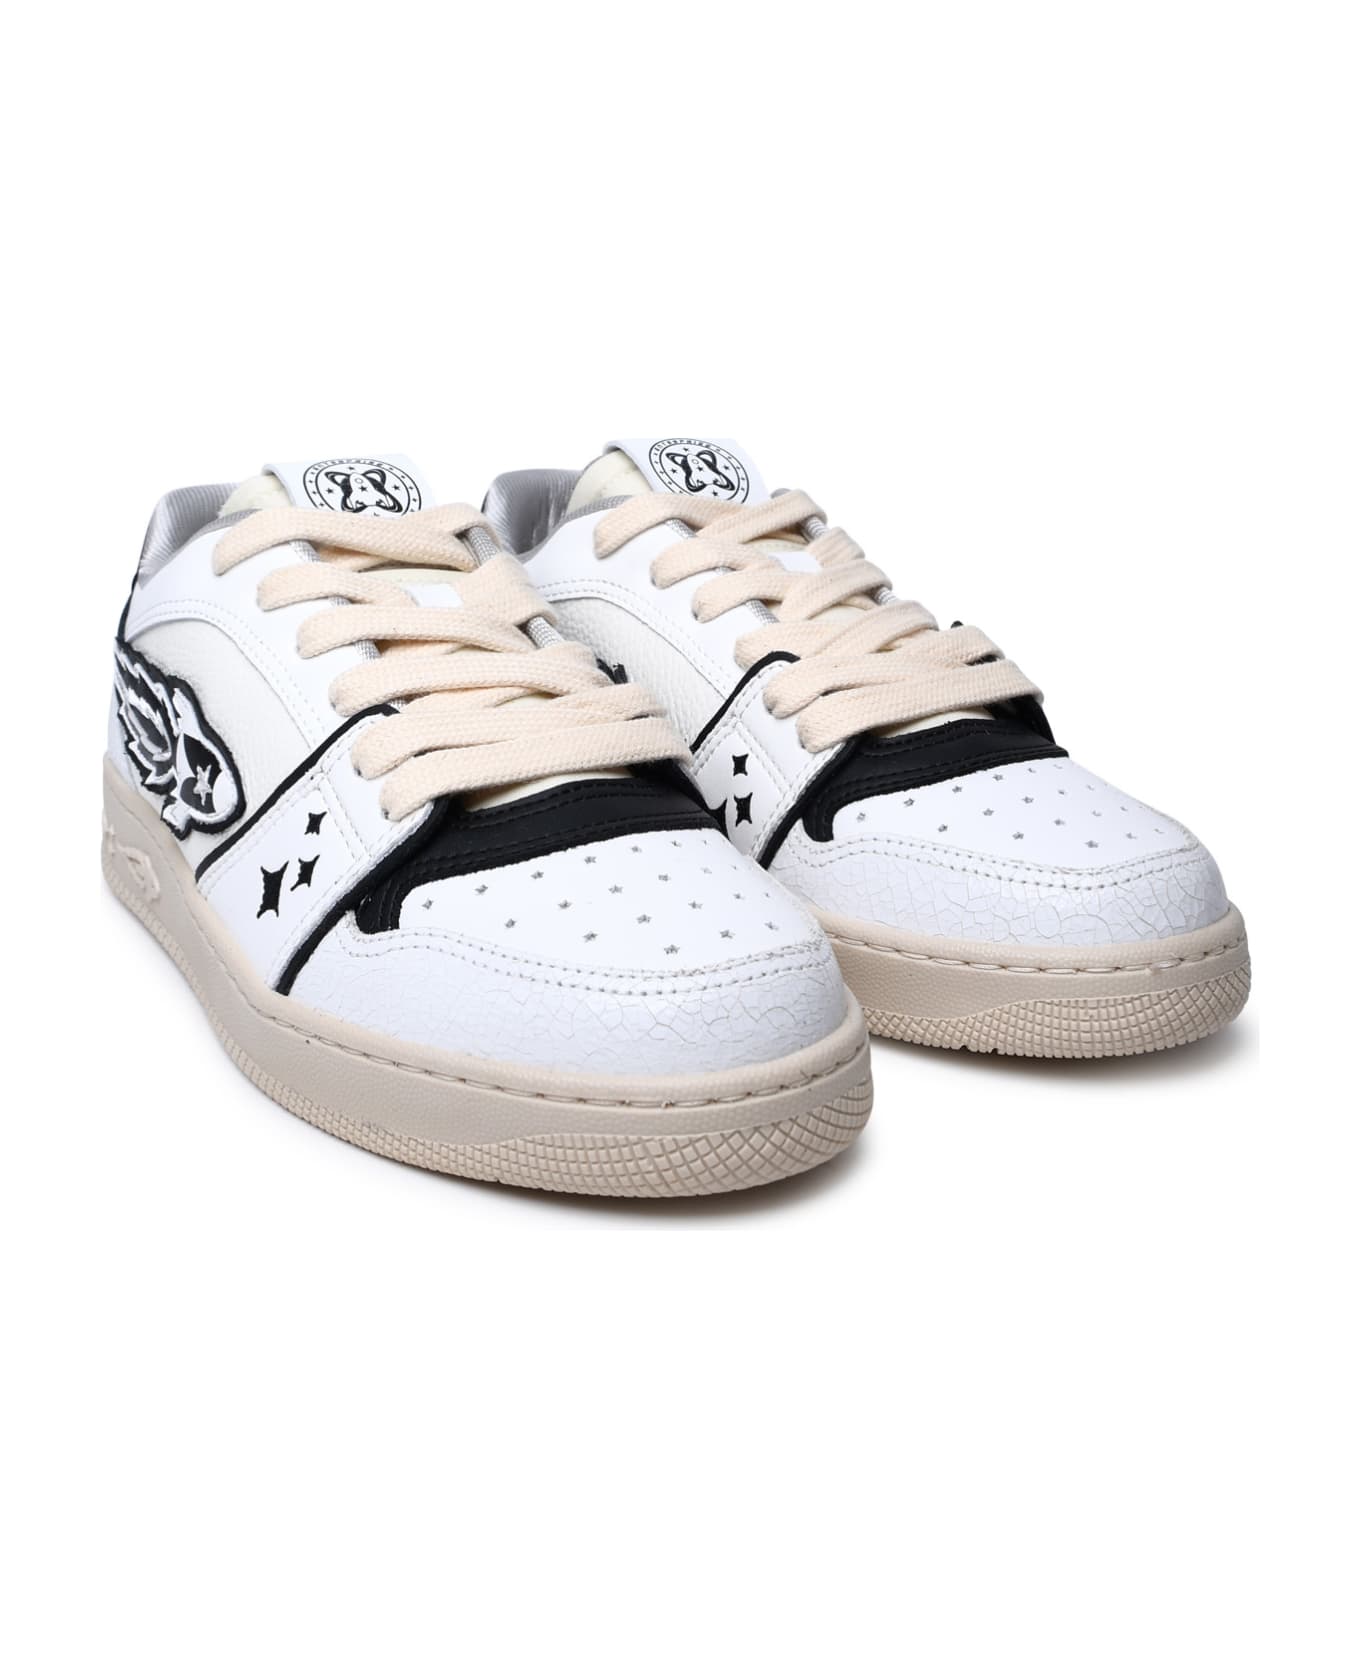 Enterprise Japan White Leather Sneakers - White